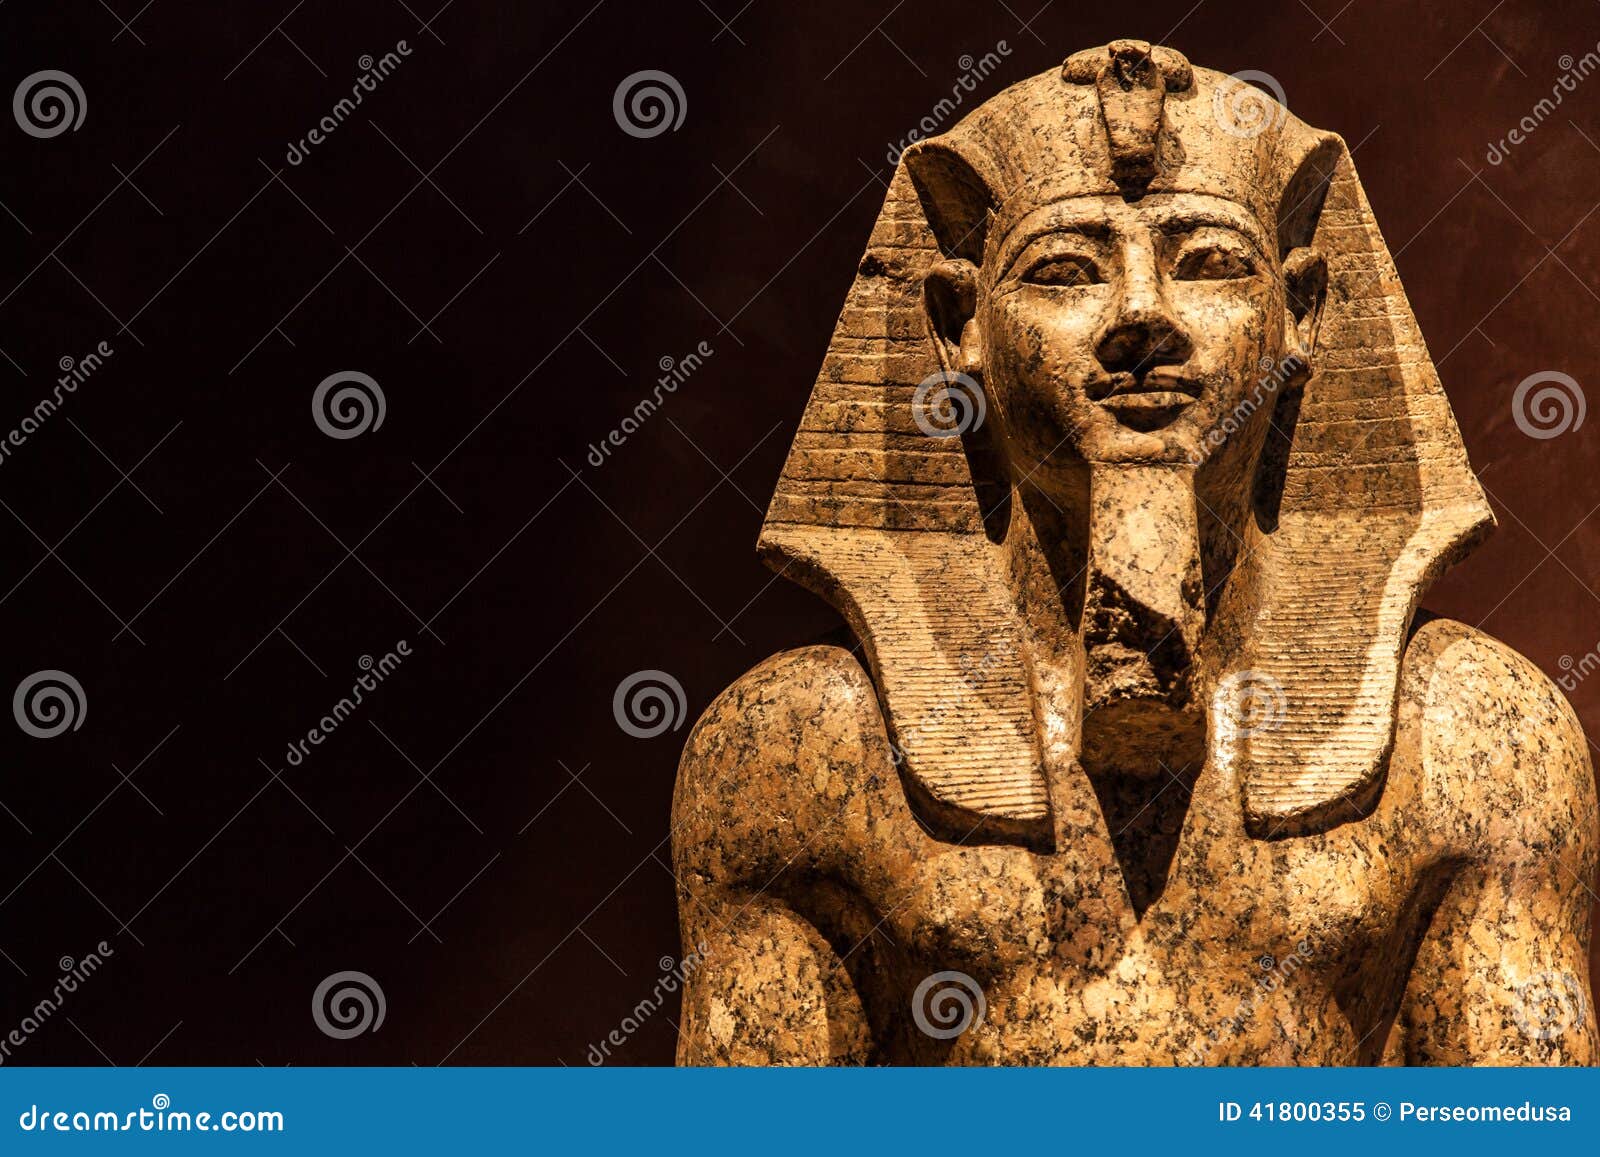 pharaoh statue